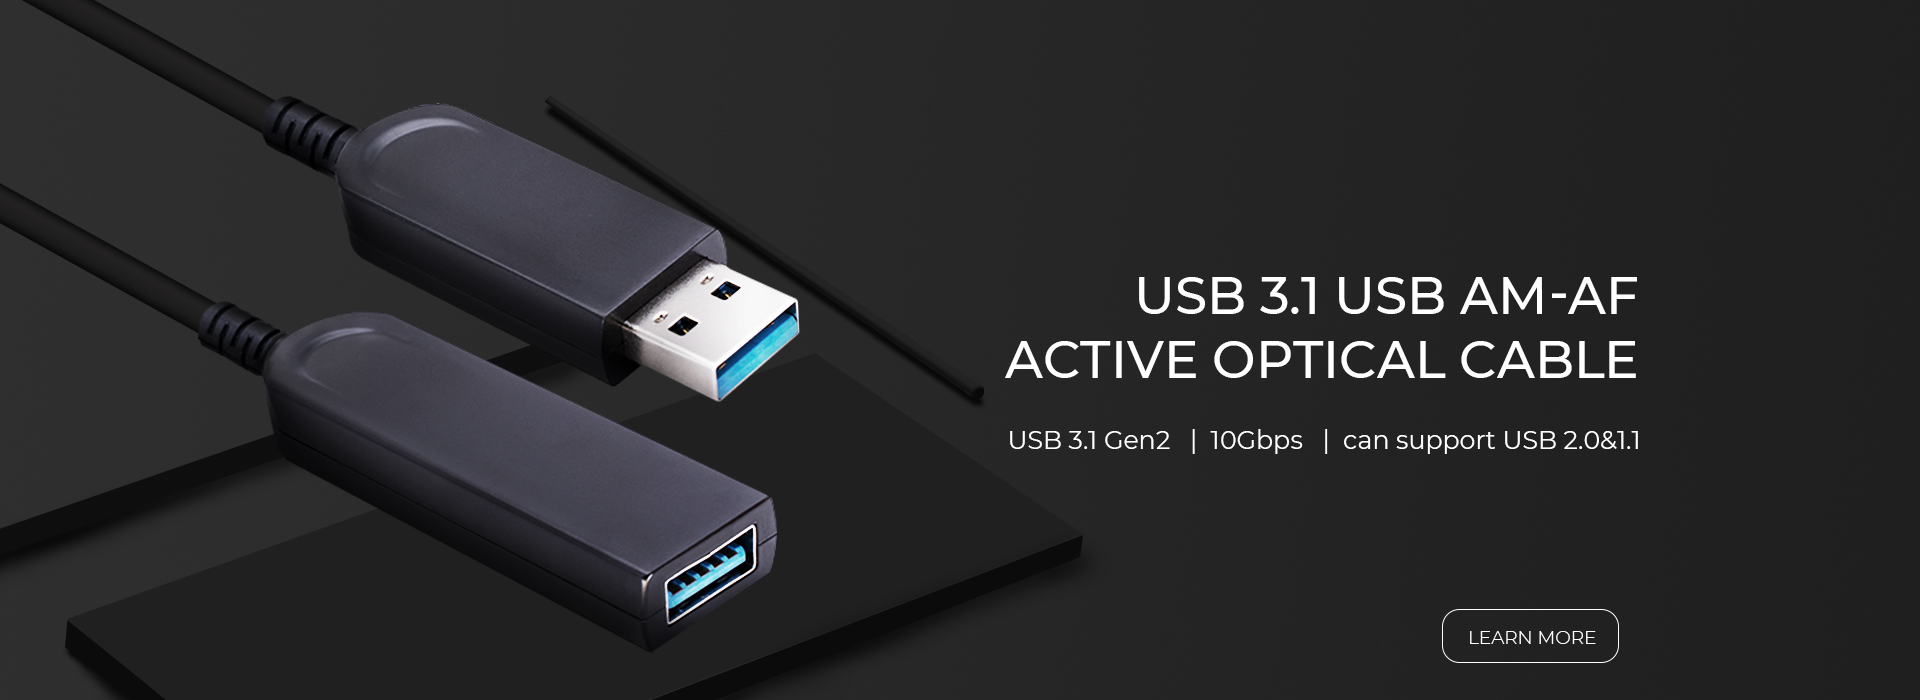 USB3.1 USBAM-AF AOC